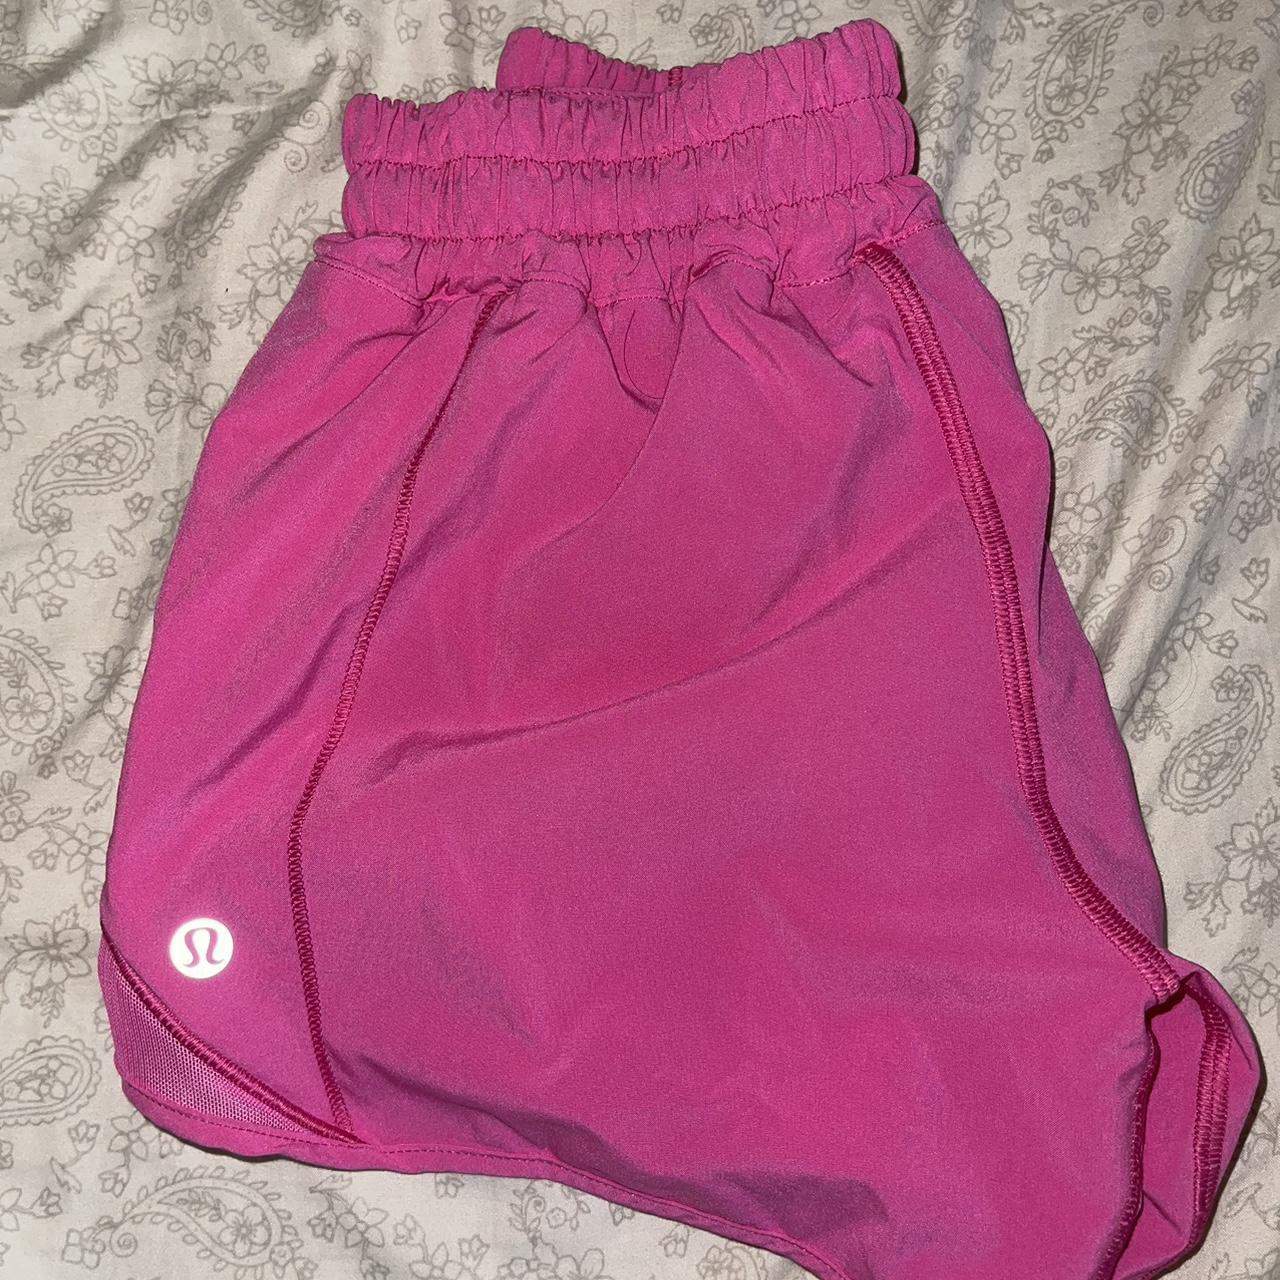 sonic pink LULULEMON hotty hot shorts 4 inch-... - Depop